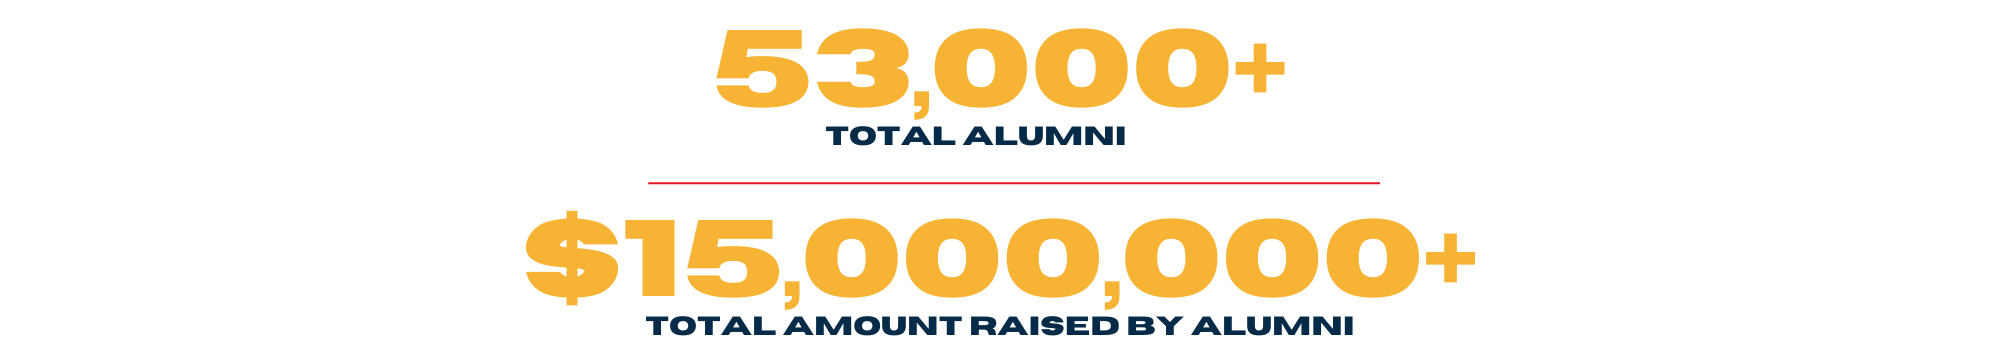 53000+ total alumni, $15000000+ total amount raised by alumni